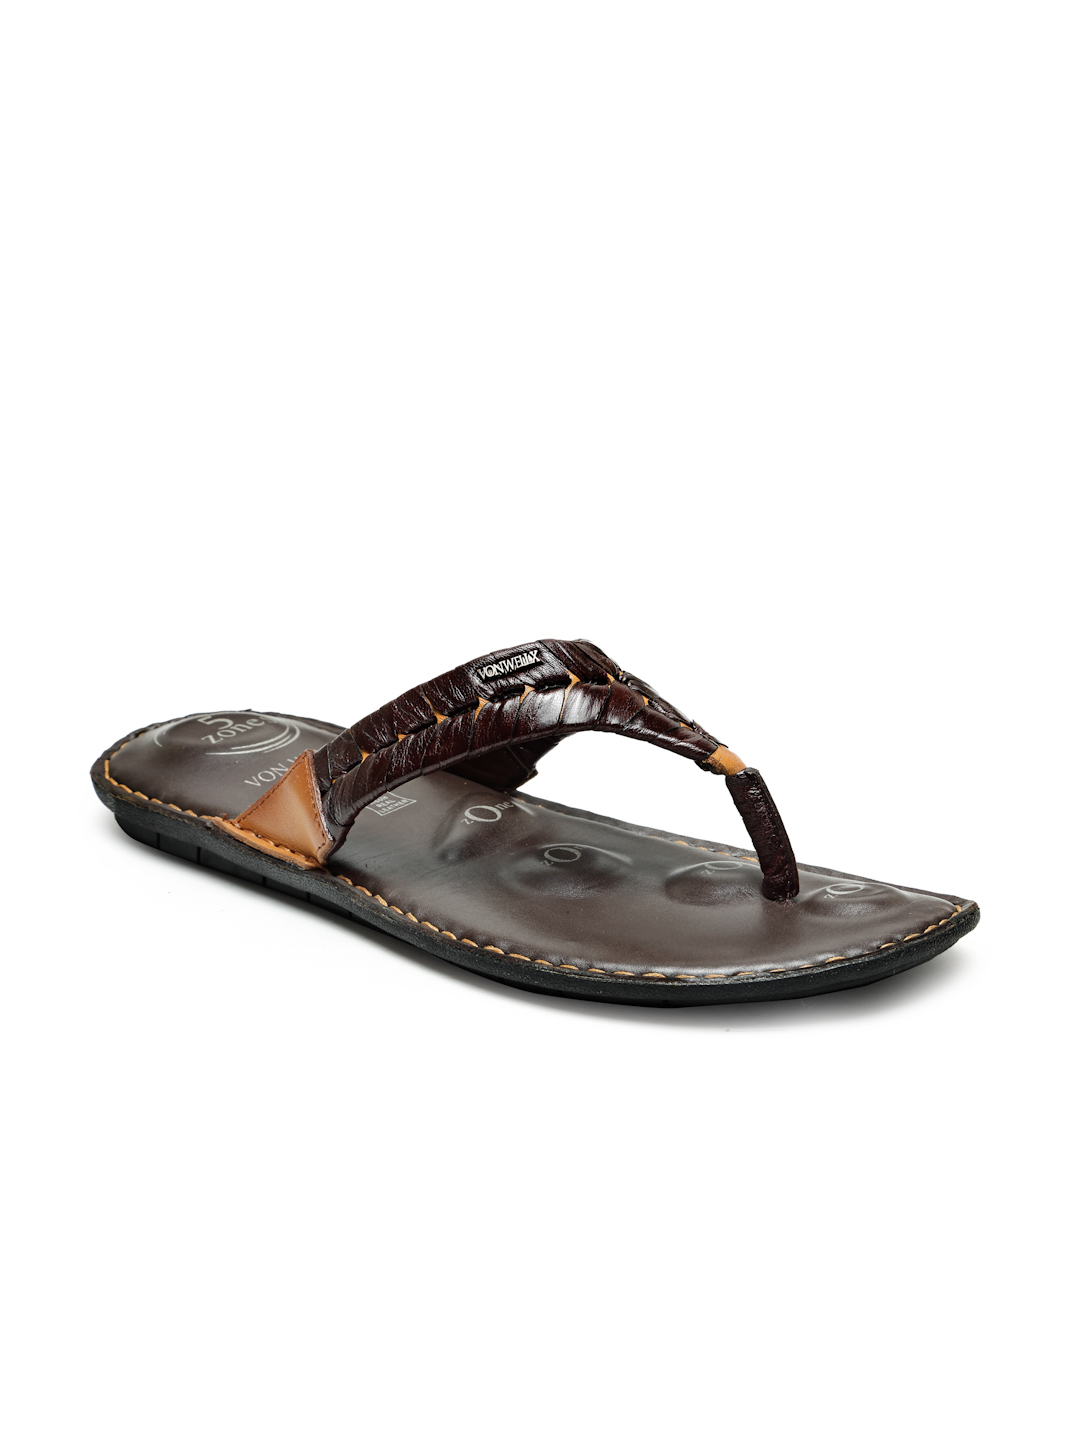 Buy Von Wellx Germany Comfort Men's Tan Slippers Alonso Online in Muscat